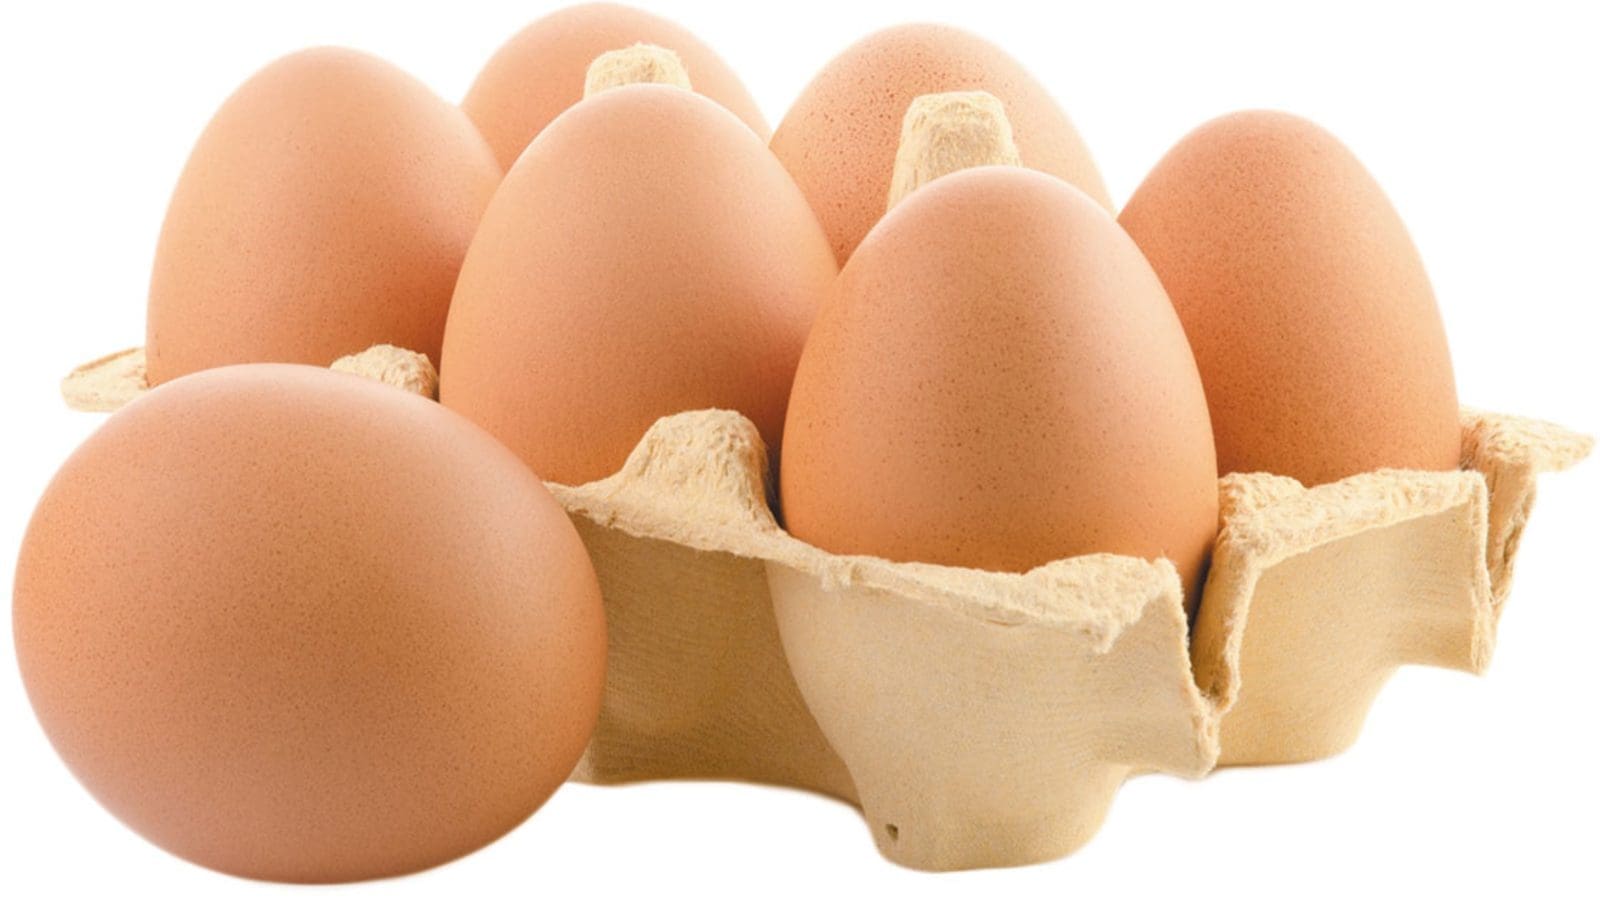 Eggflation will persist through 2023: Rabobank report